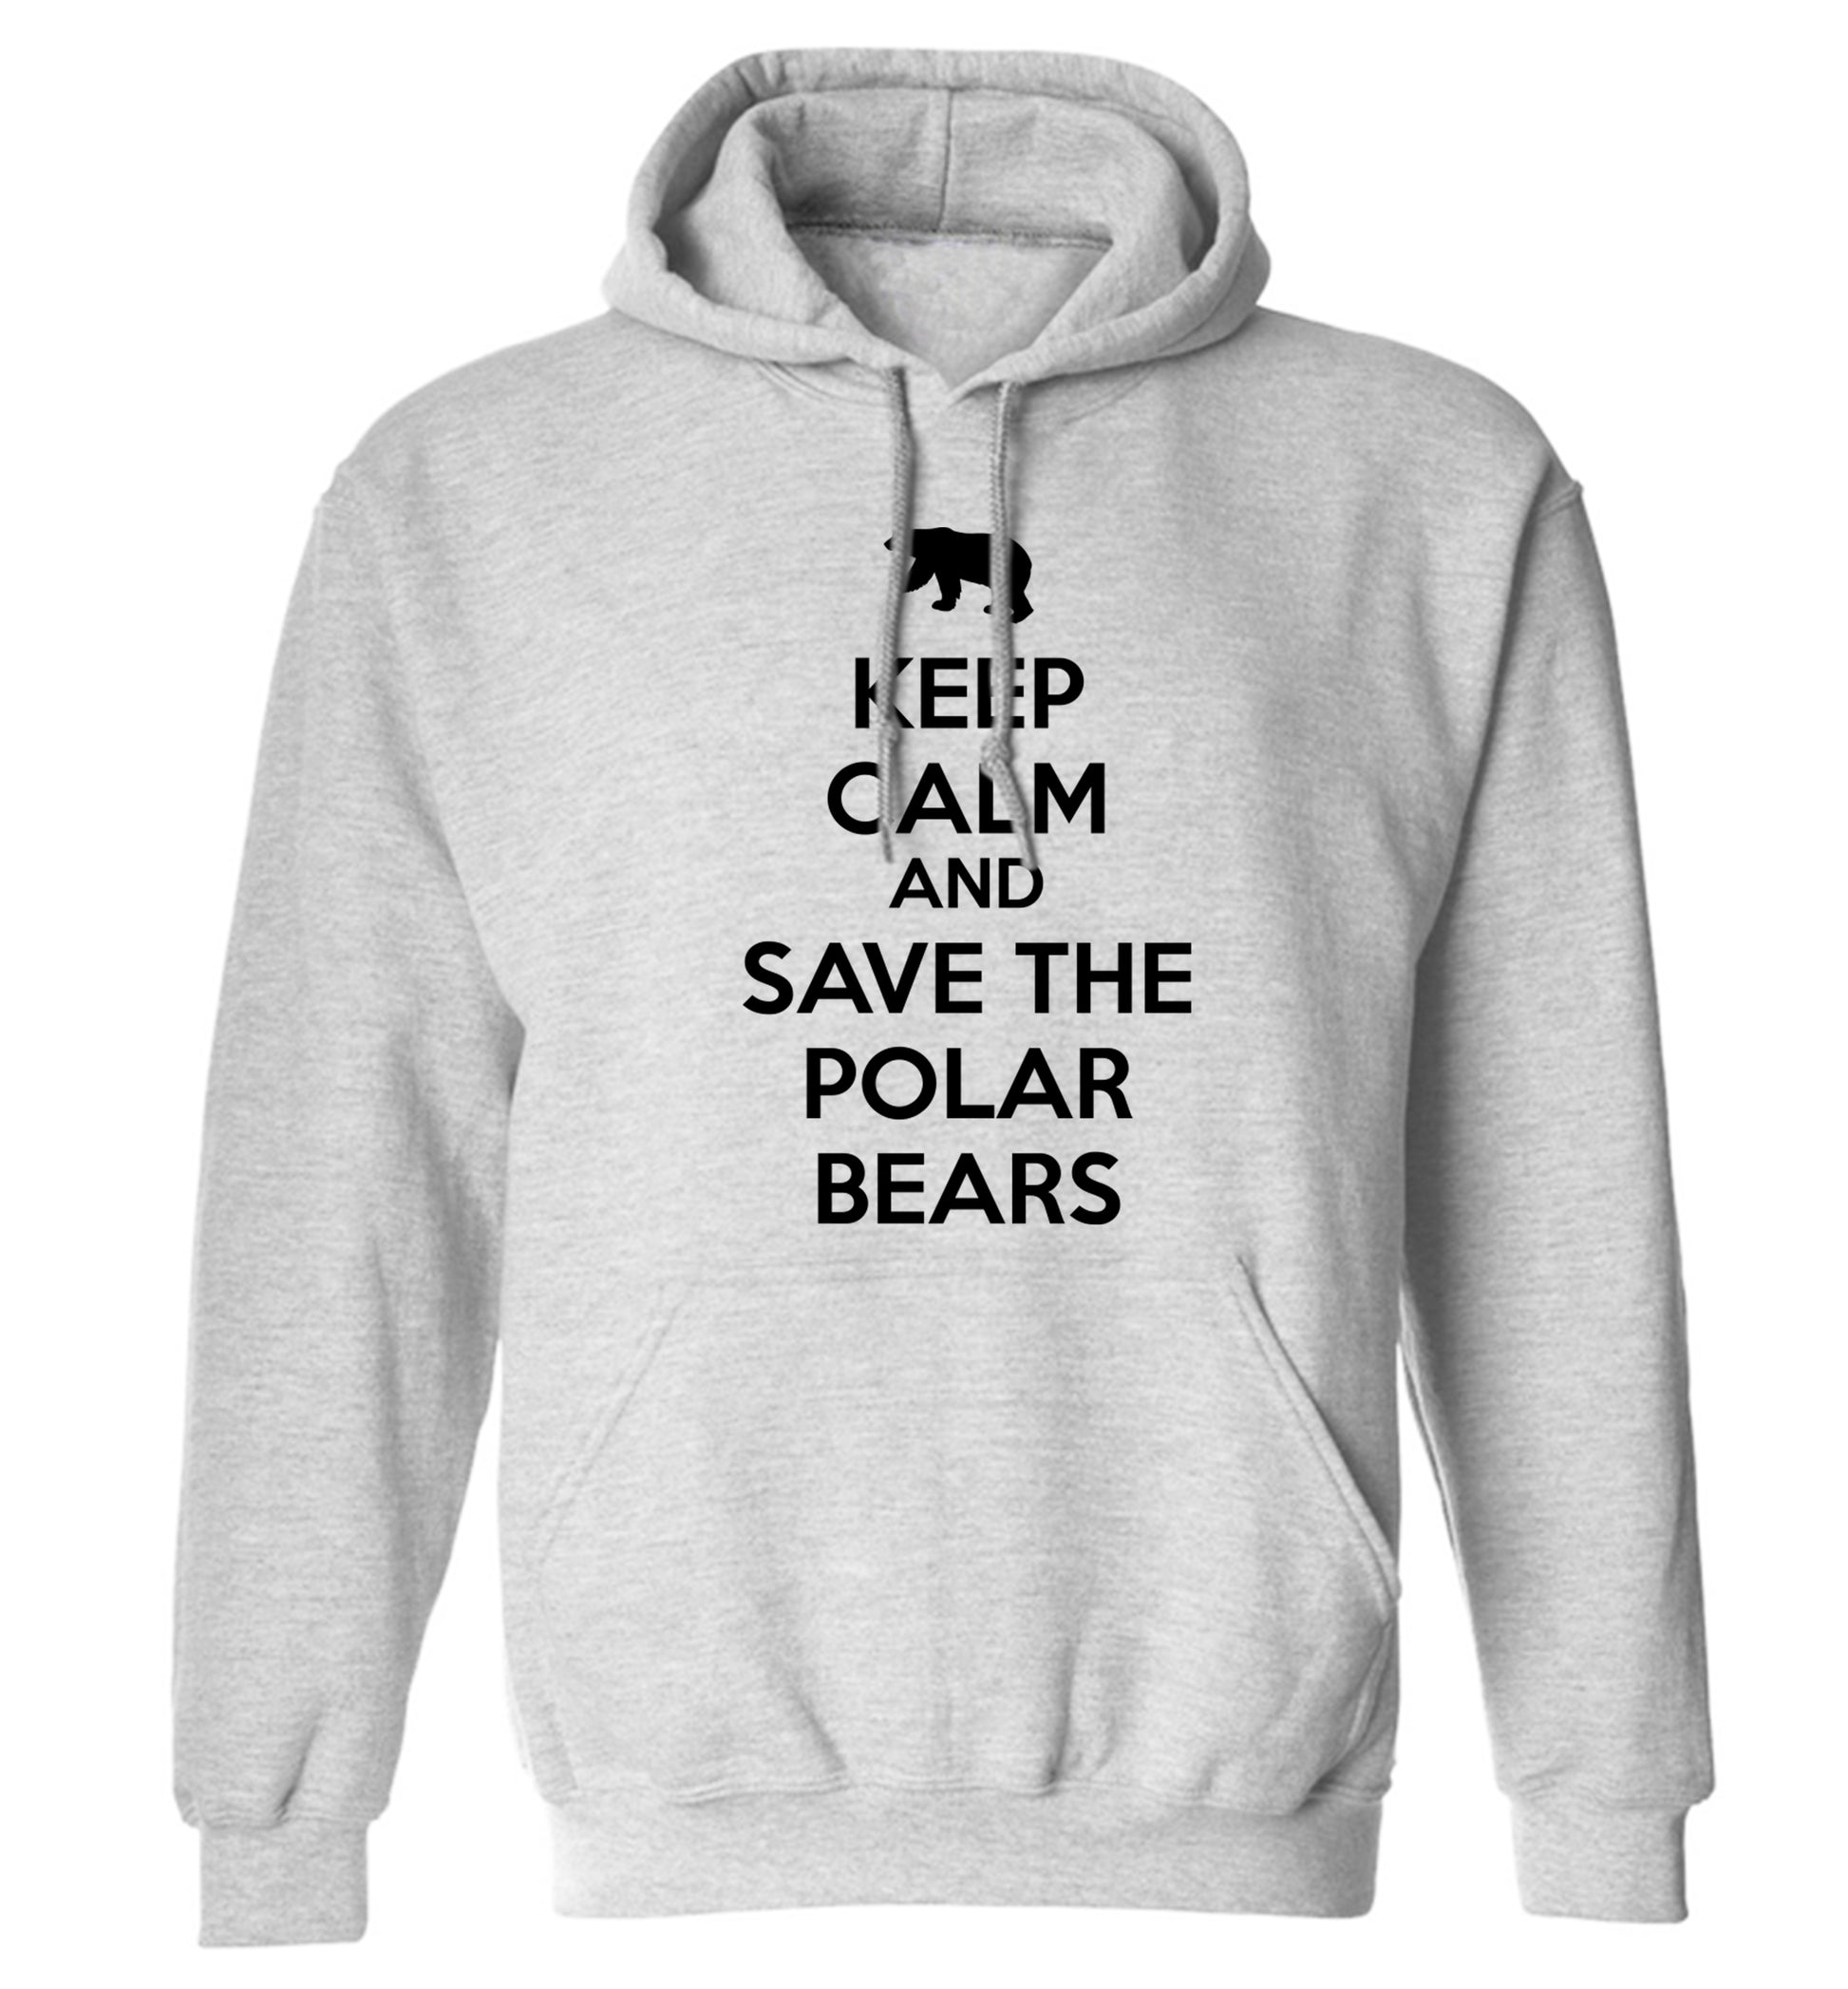 Keep calm and save the polar bears adults unisex grey hoodie 2XL